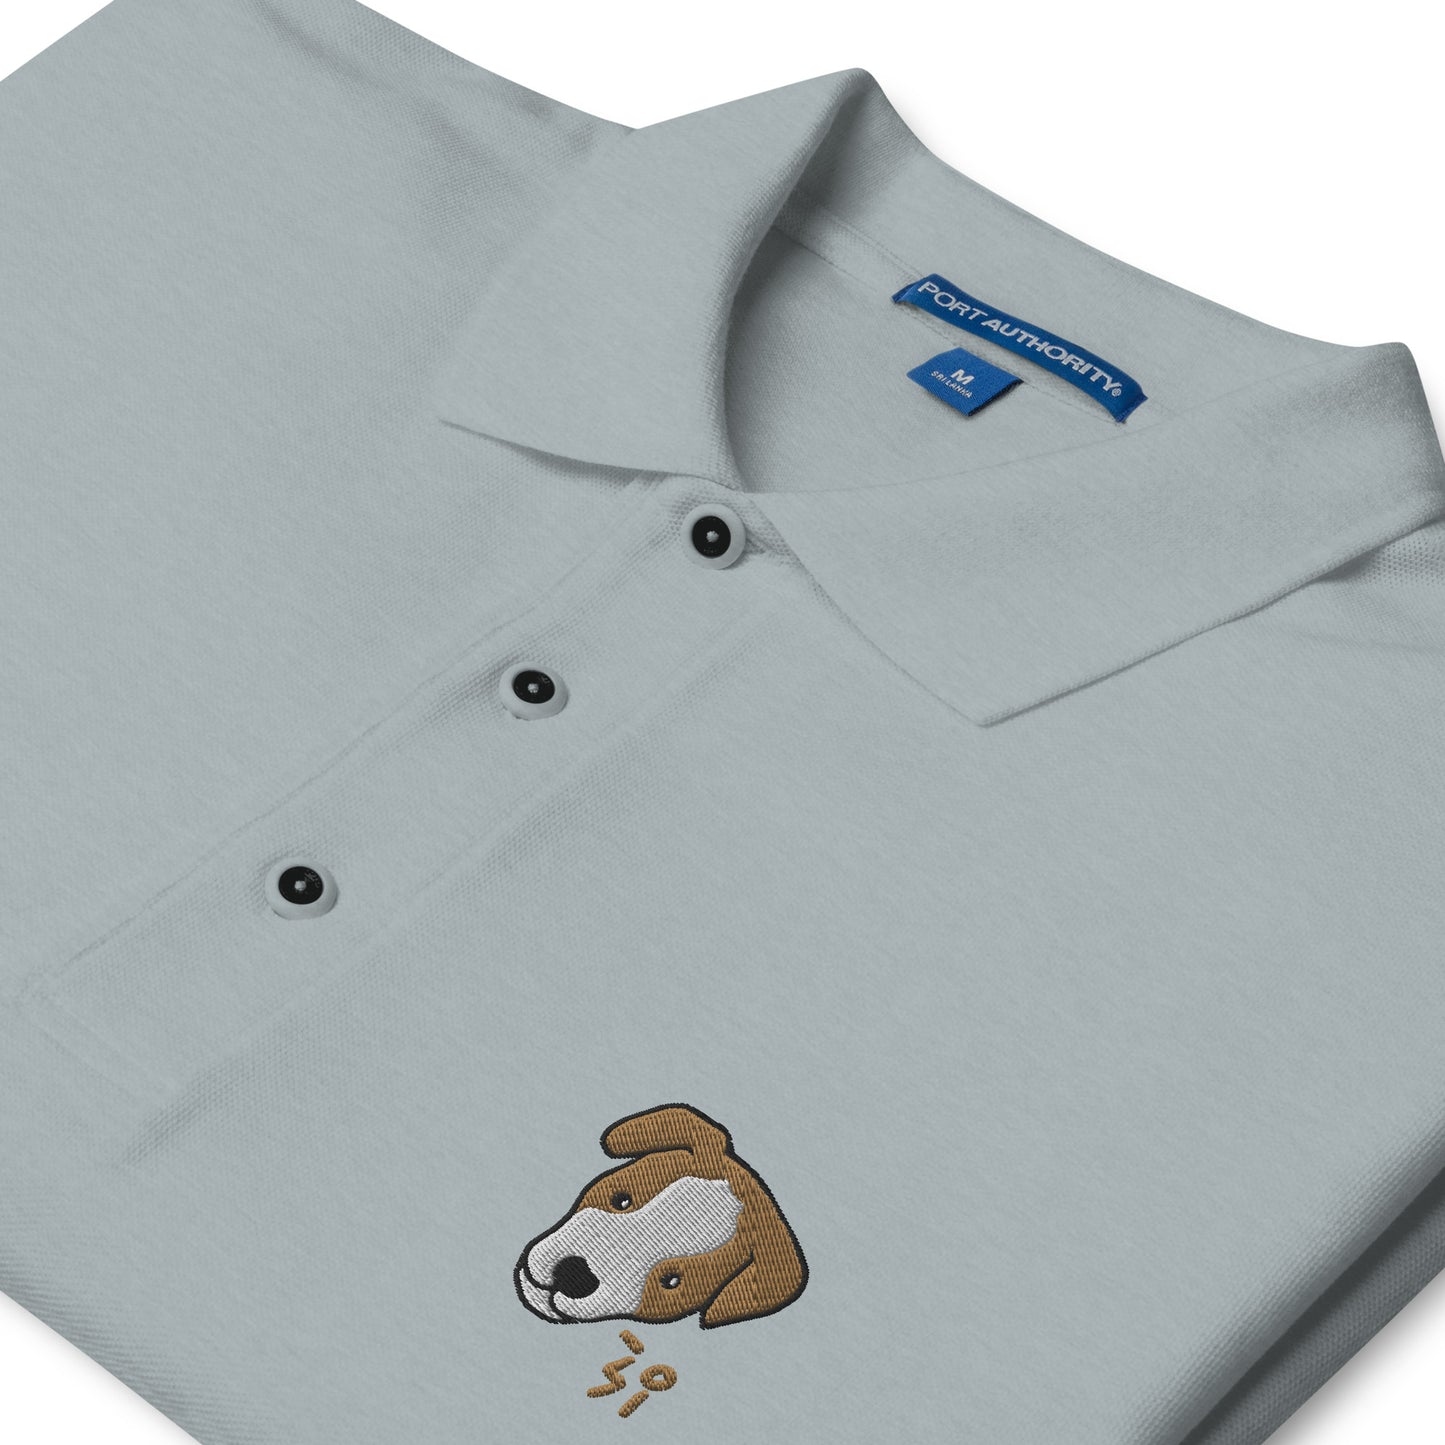 Jack Russell Terrier Men's Premium Polo